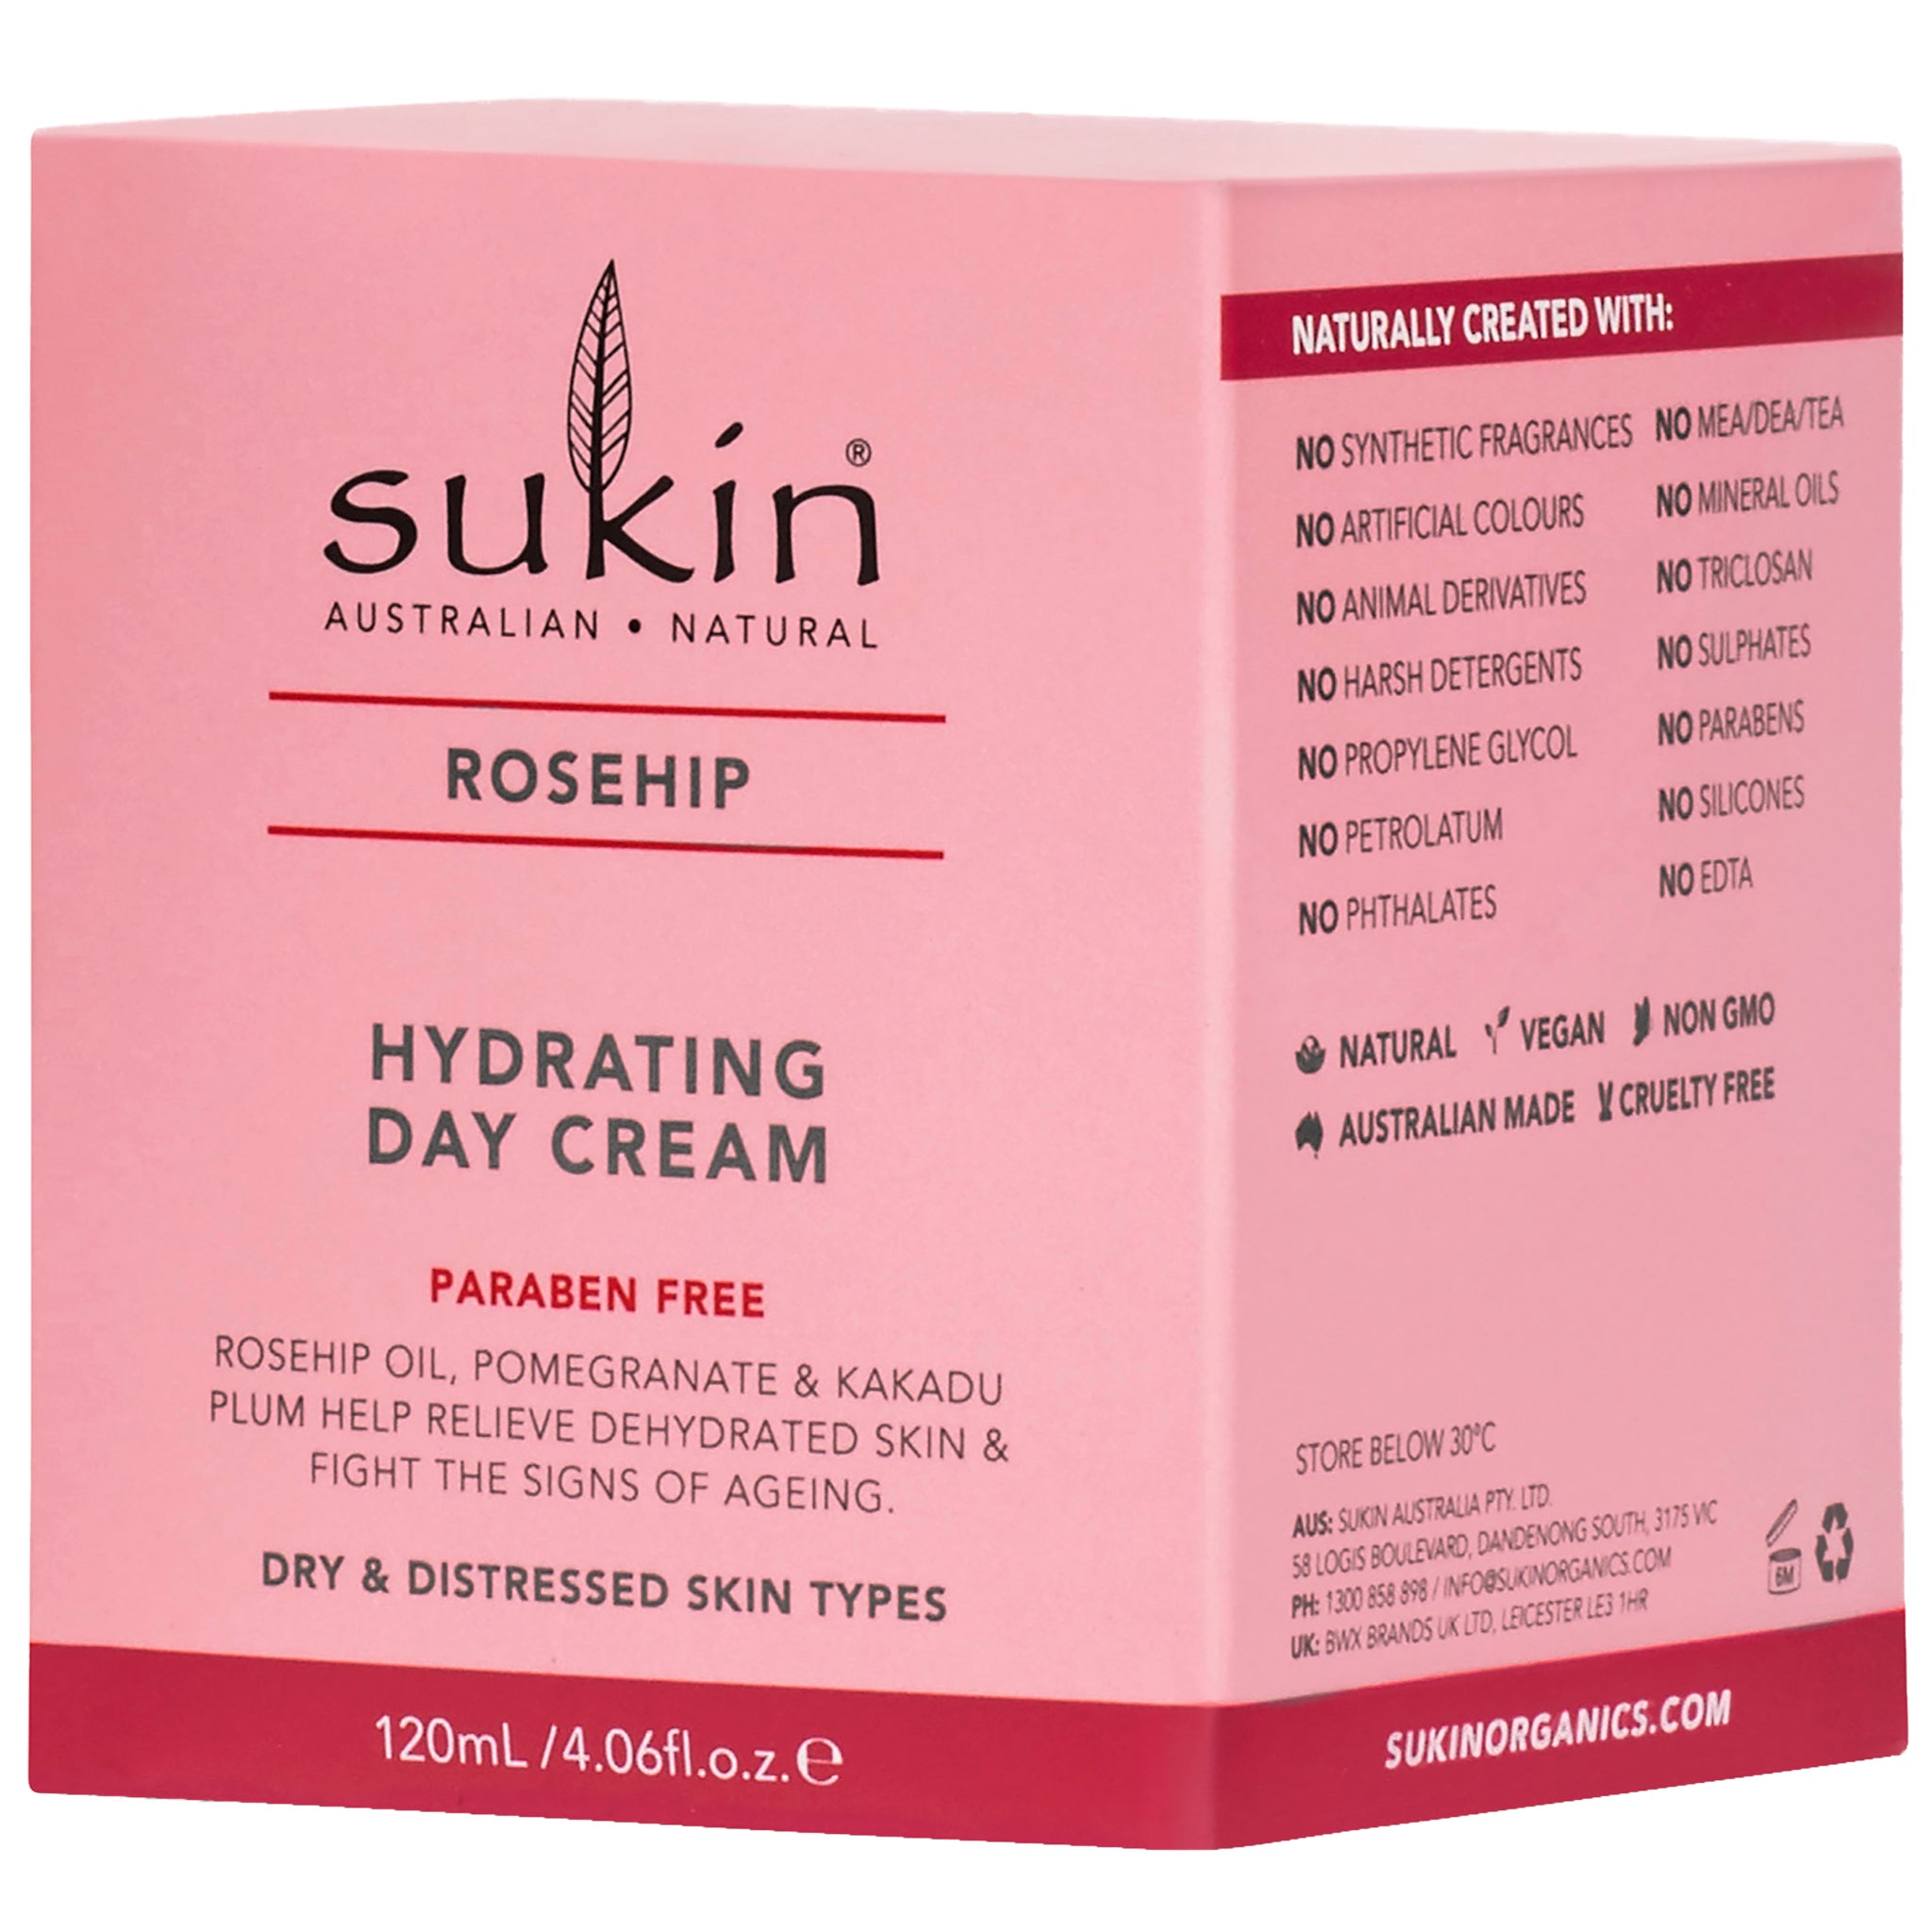 Rosehip Hydrating Day Cream - mypure.co.uk